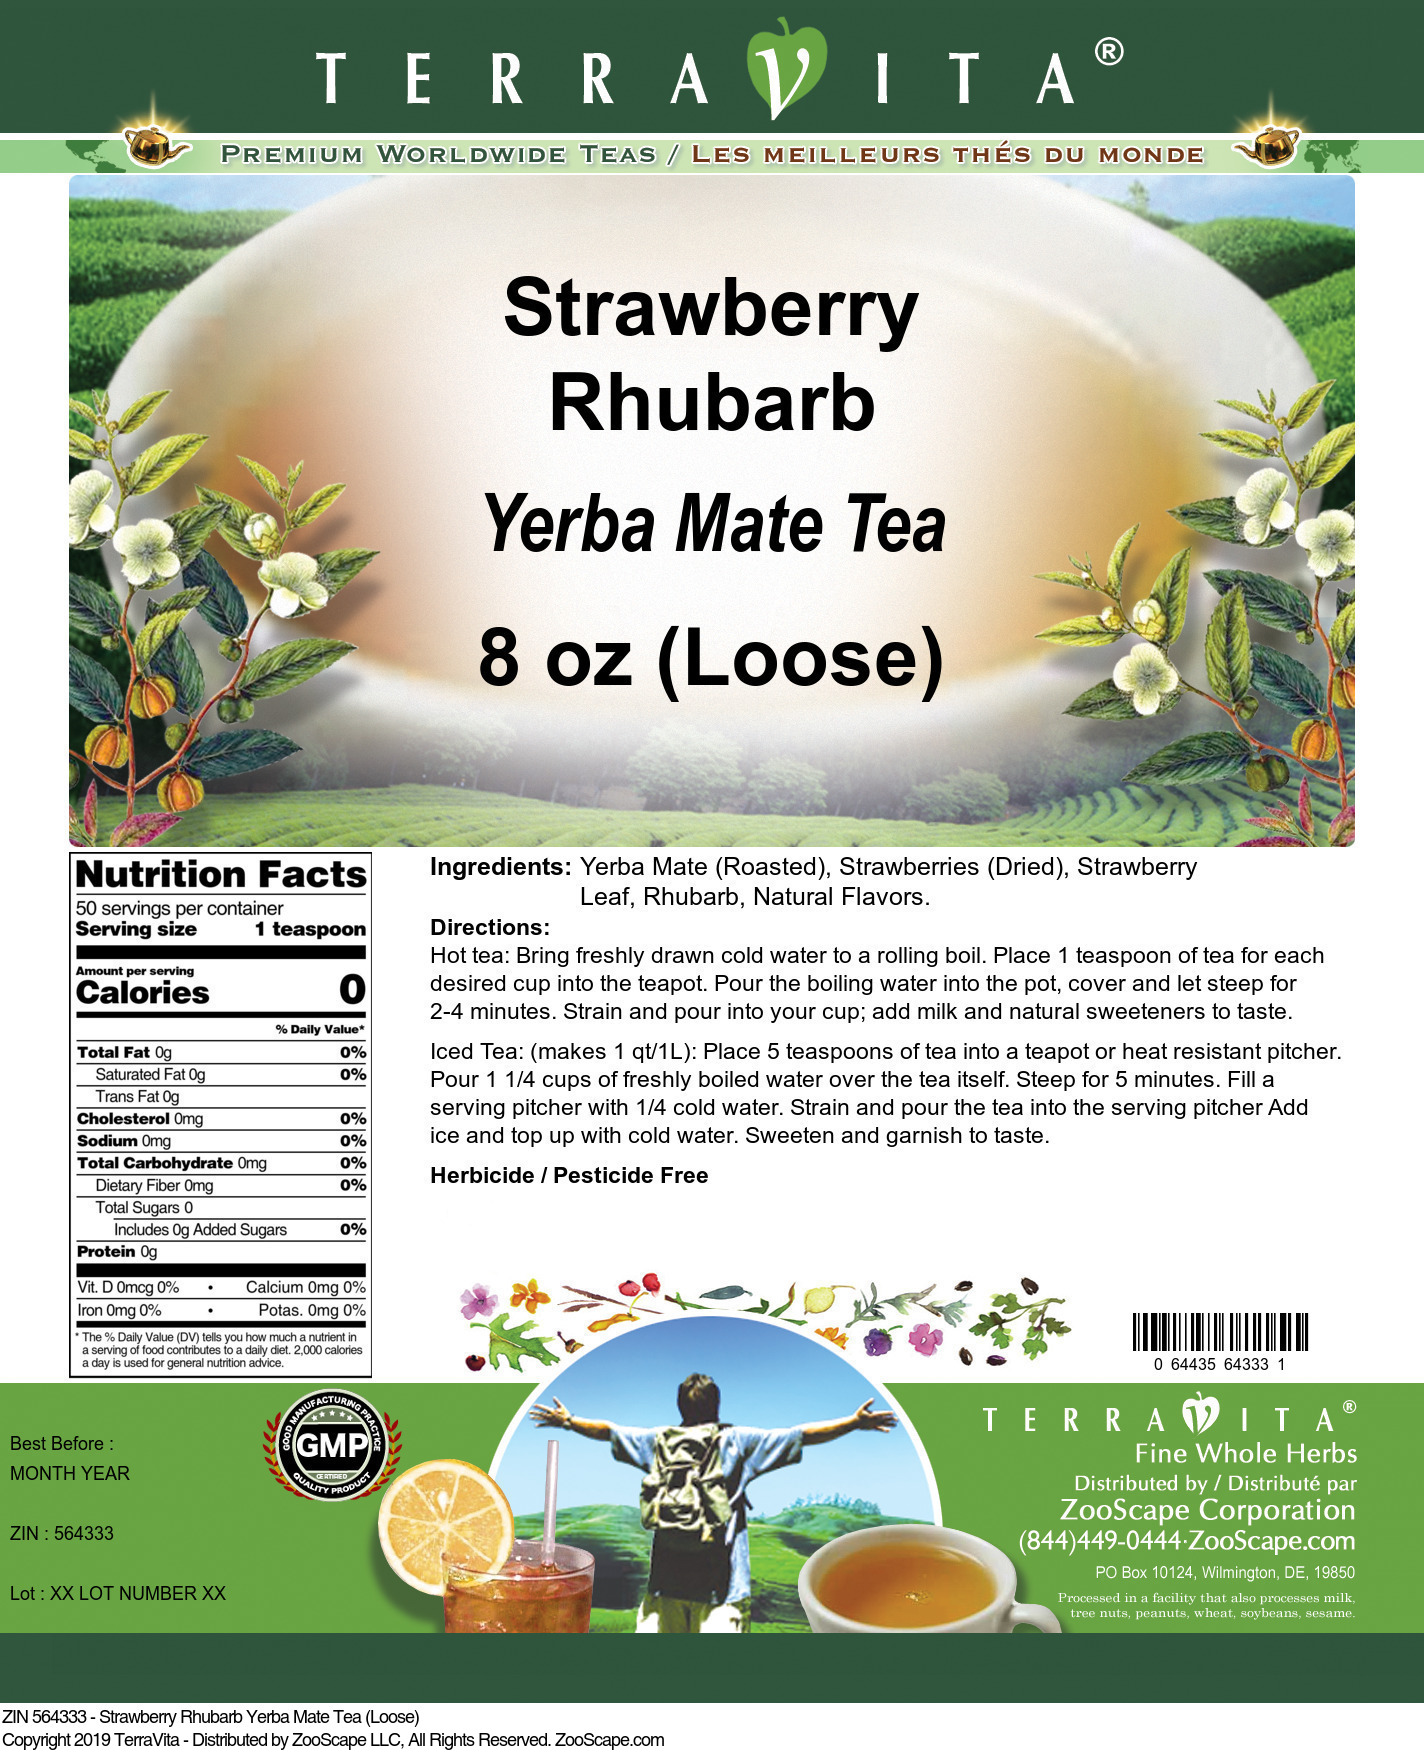 Strawberry Rhubarb Yerba Mate Tea (Loose) - Label